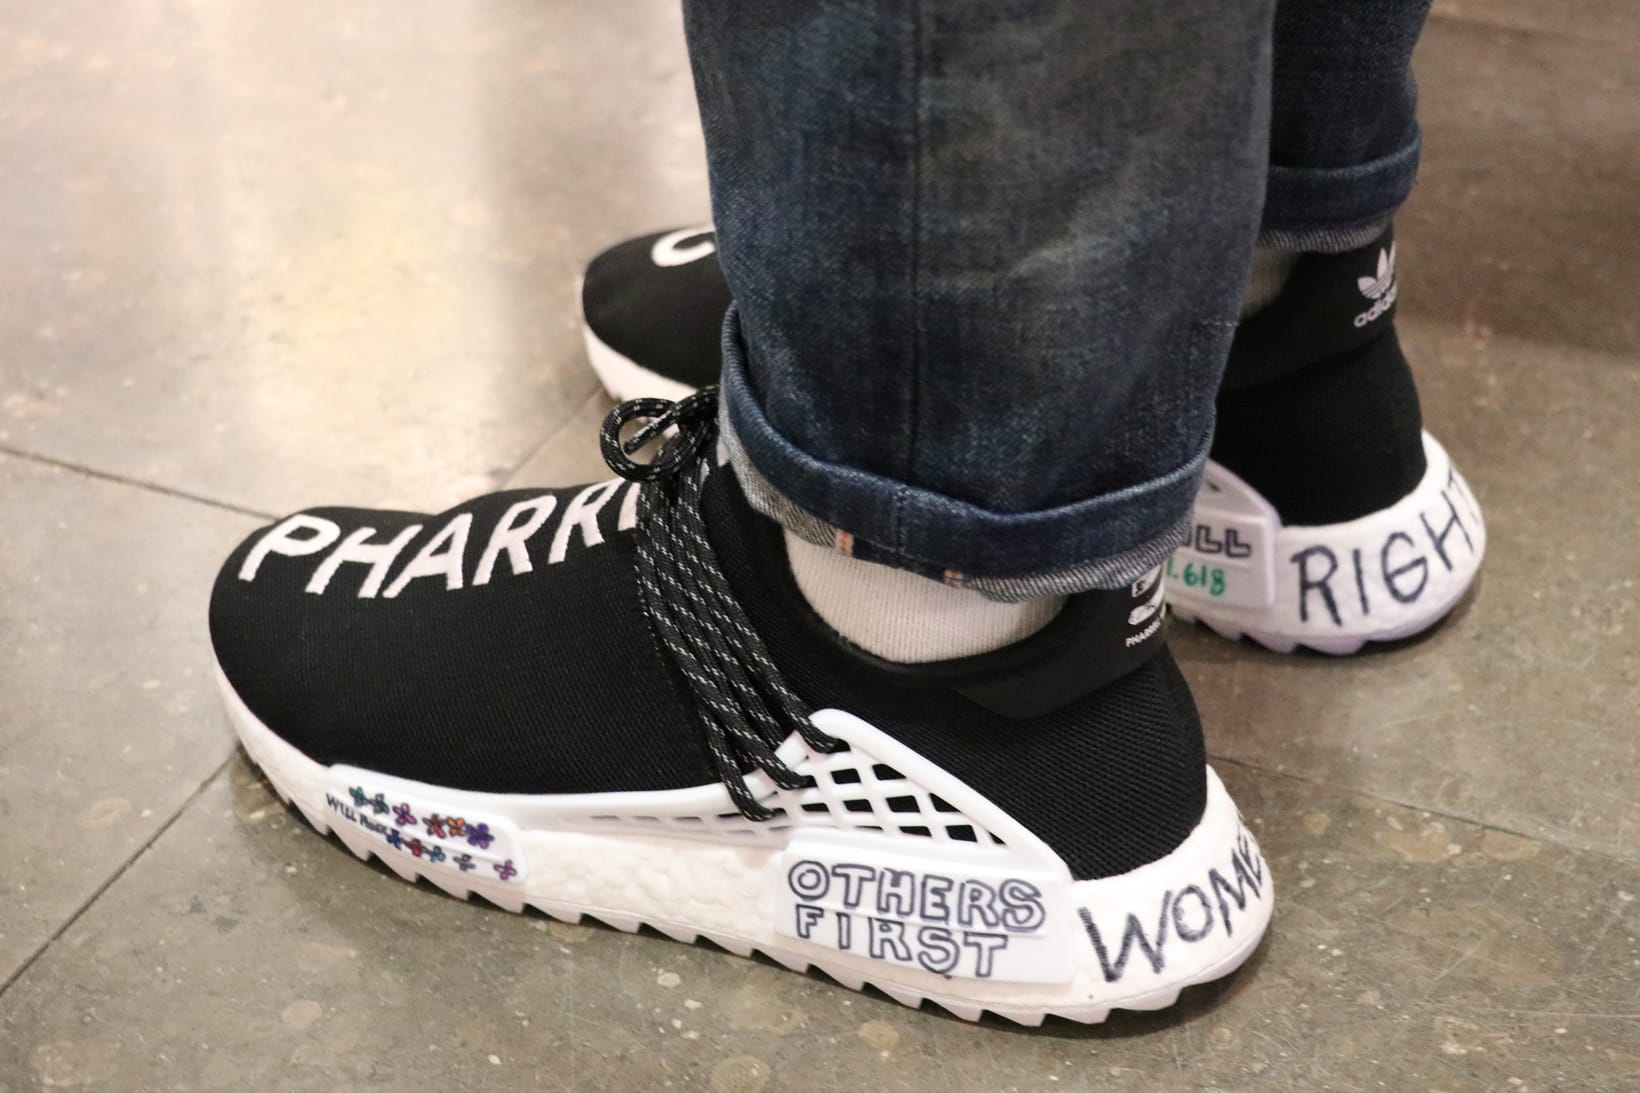 chanel shoes pharrell williams